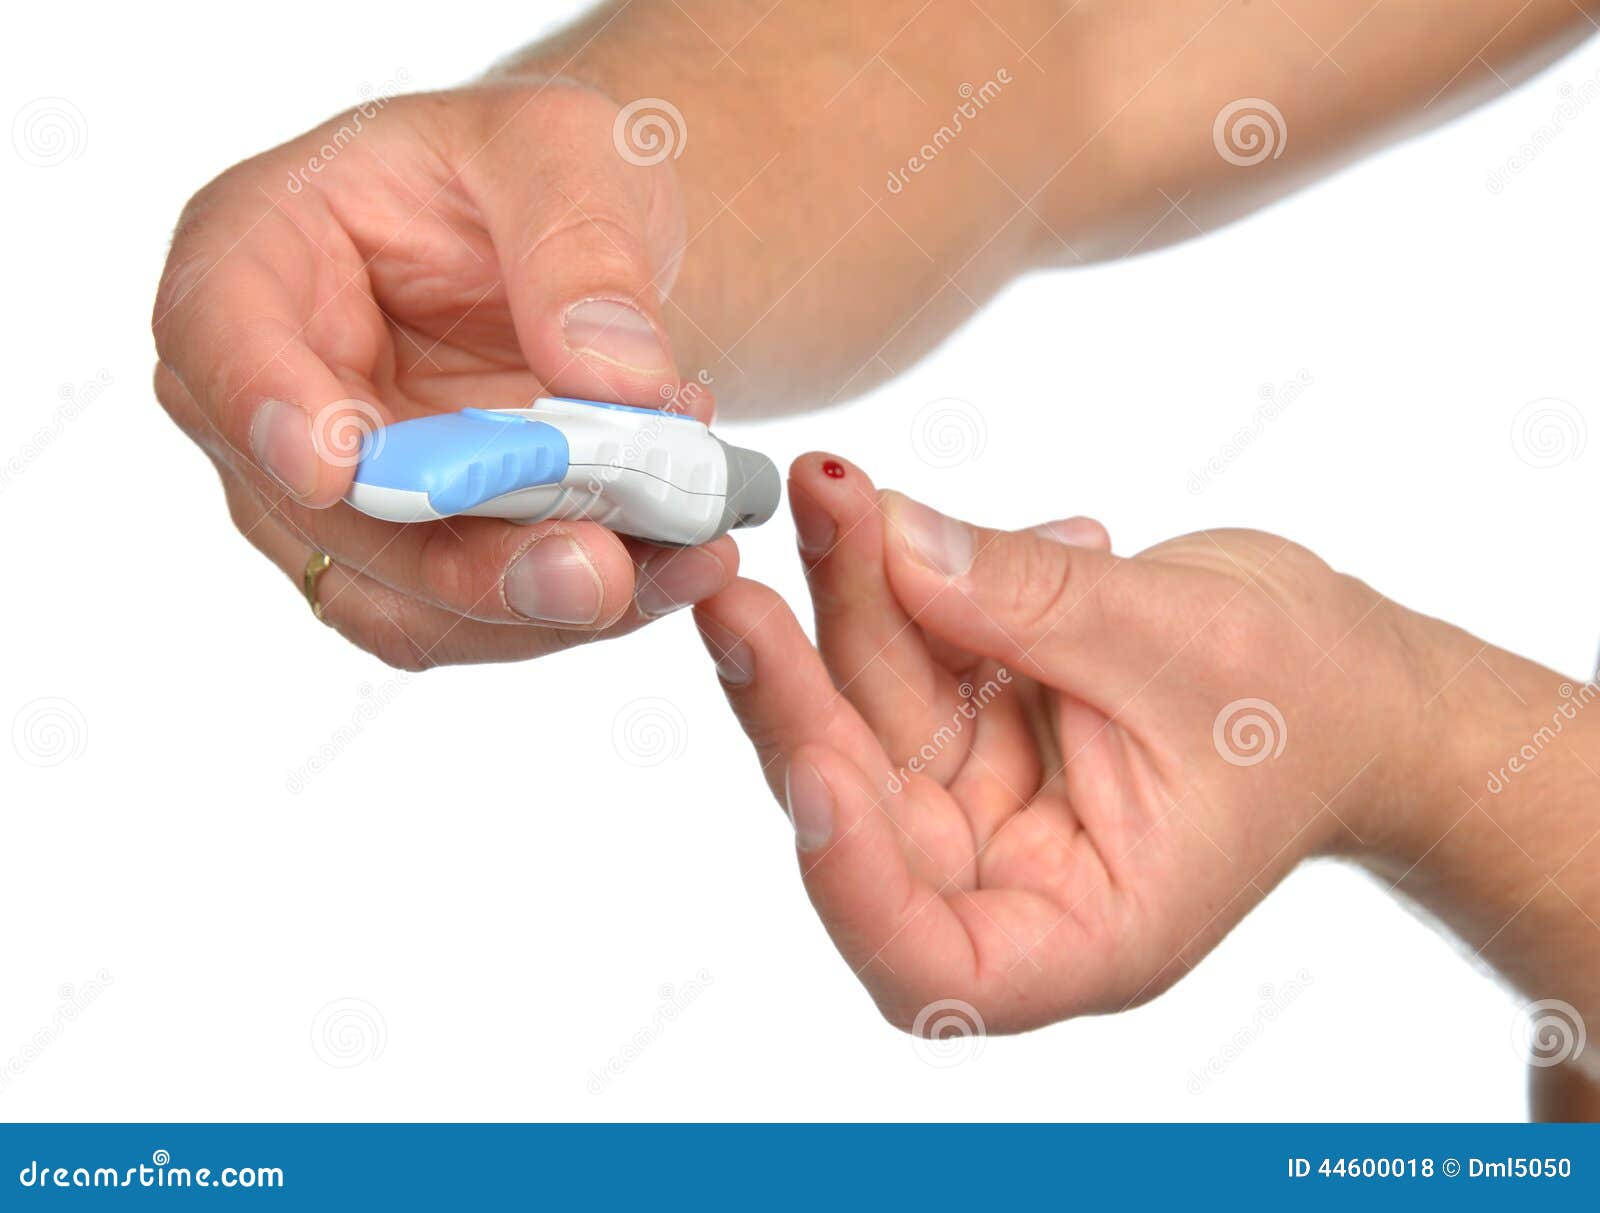 Как колоть палец. Маникюр сахарный диабет. Аппарат для укола из пальца.